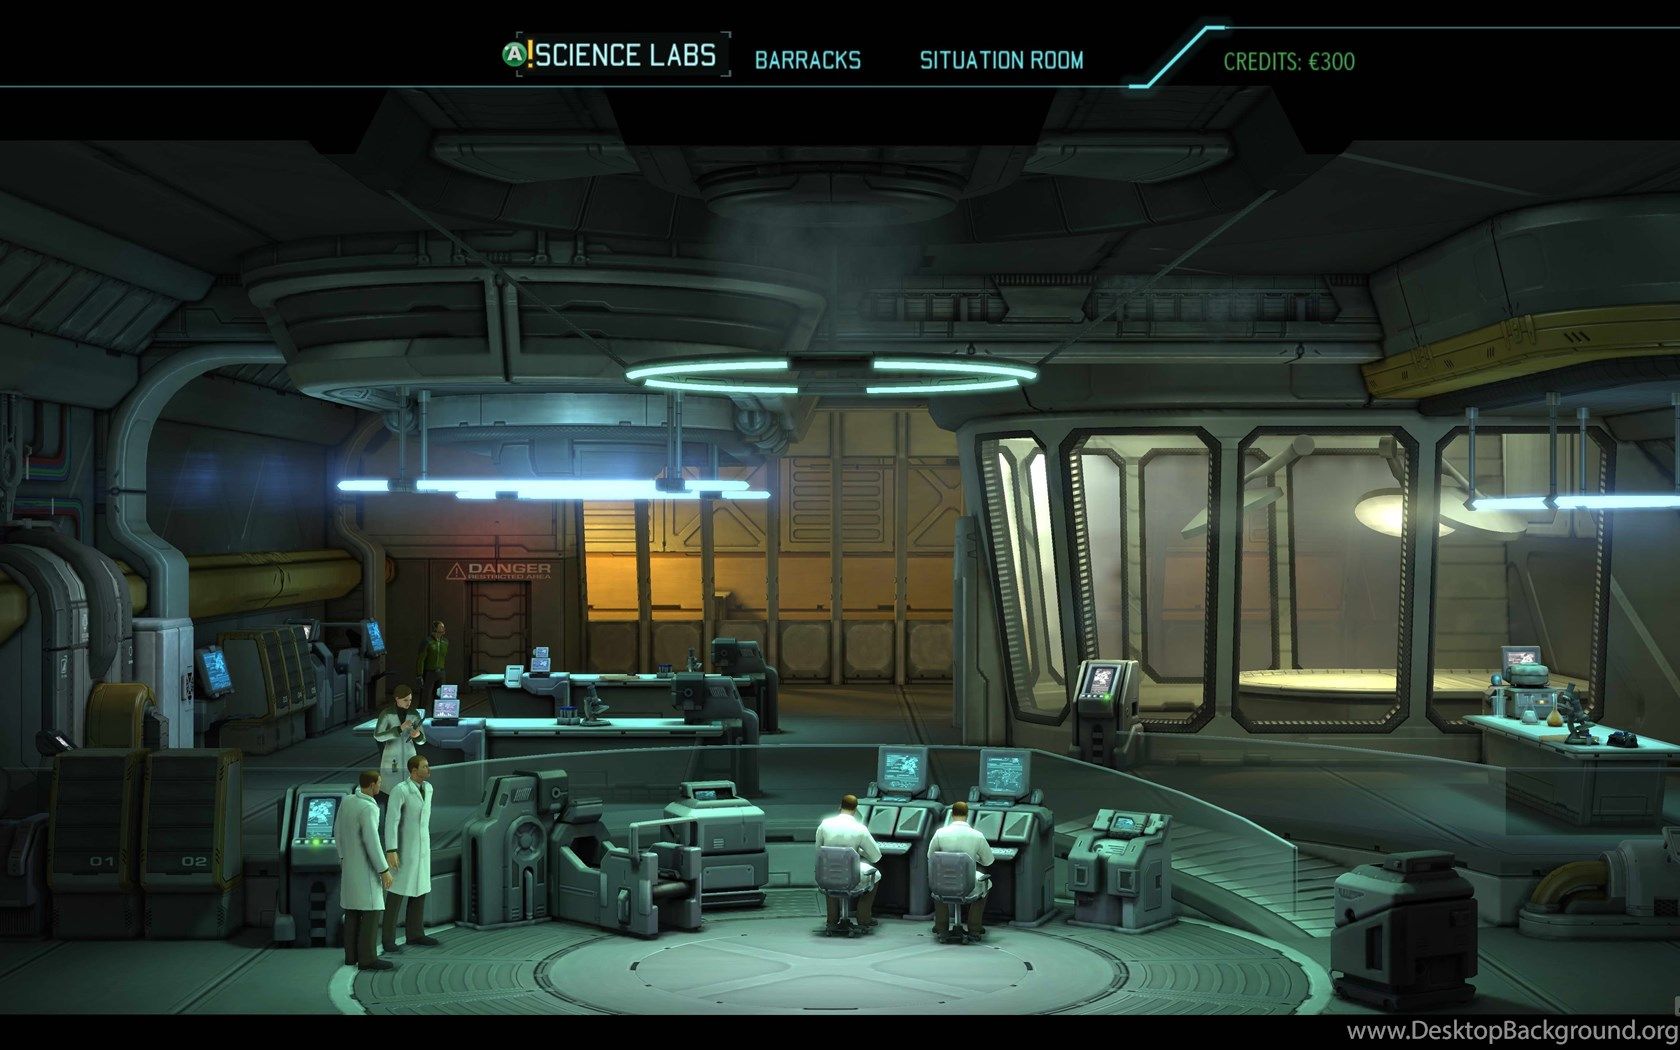 Top Movie Science Lab Image For Desktop Background